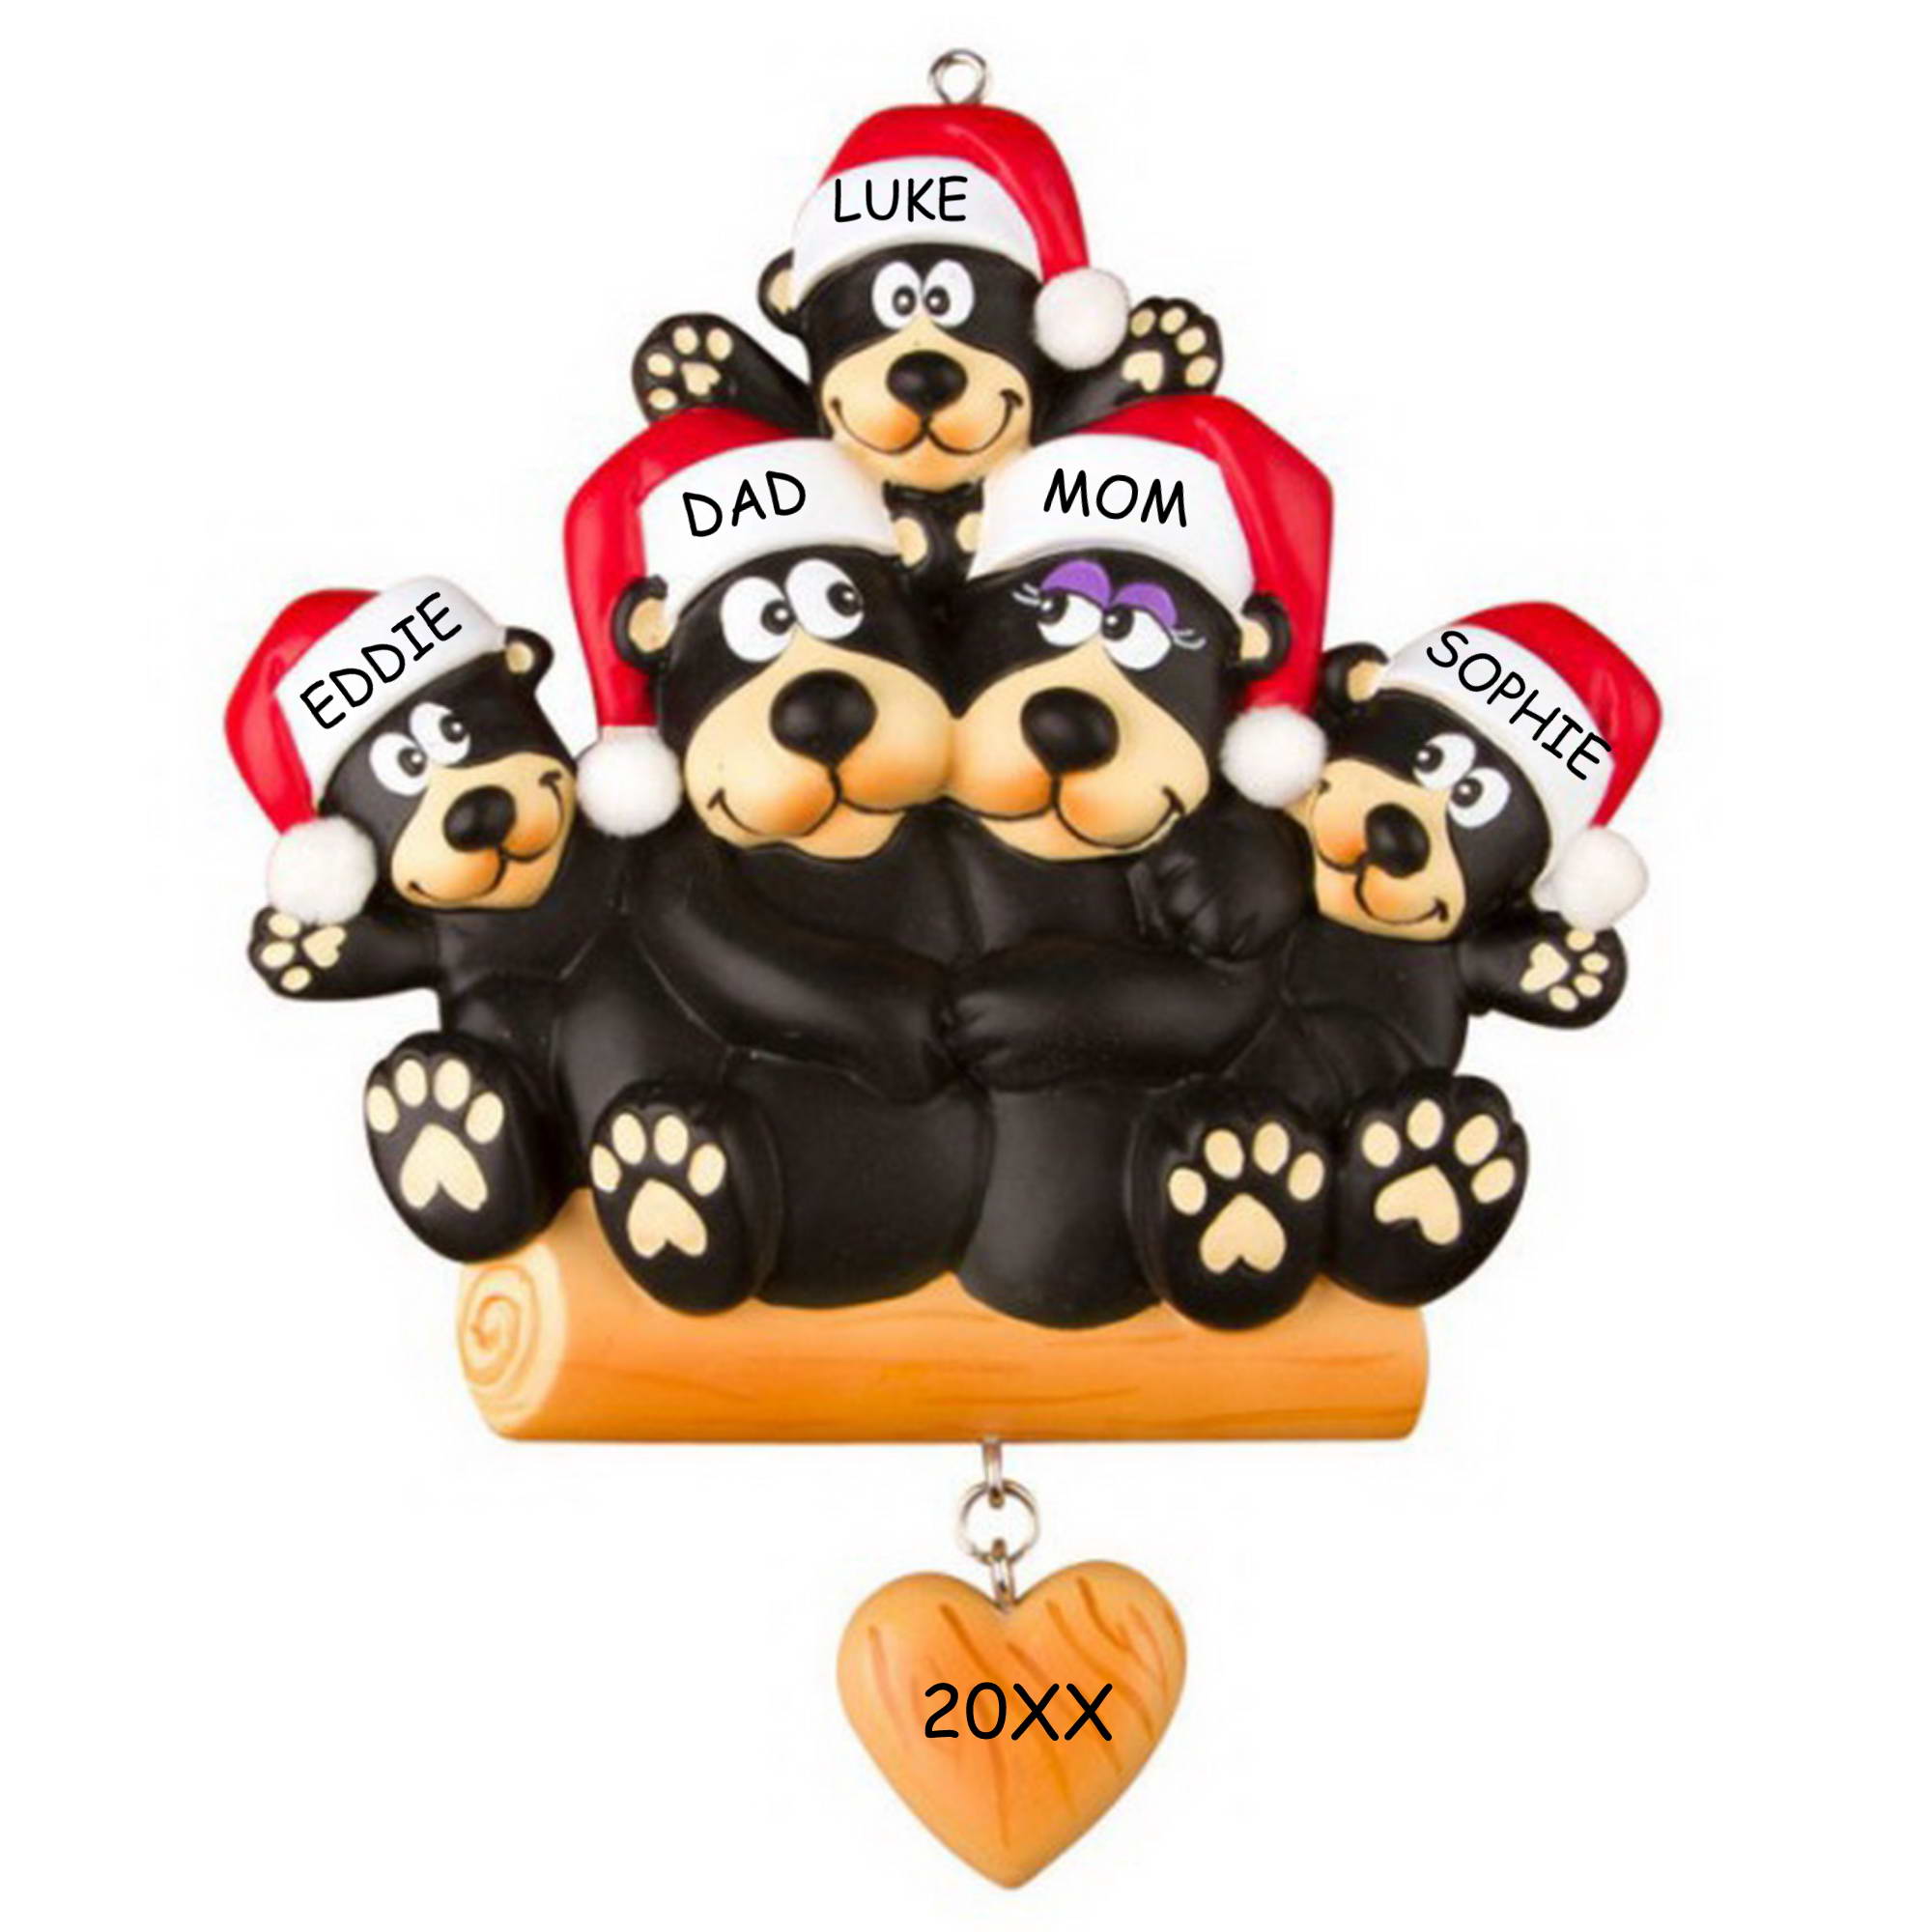 Personalized Huggable Black Bear Family Christmas Ornament - Family of 5